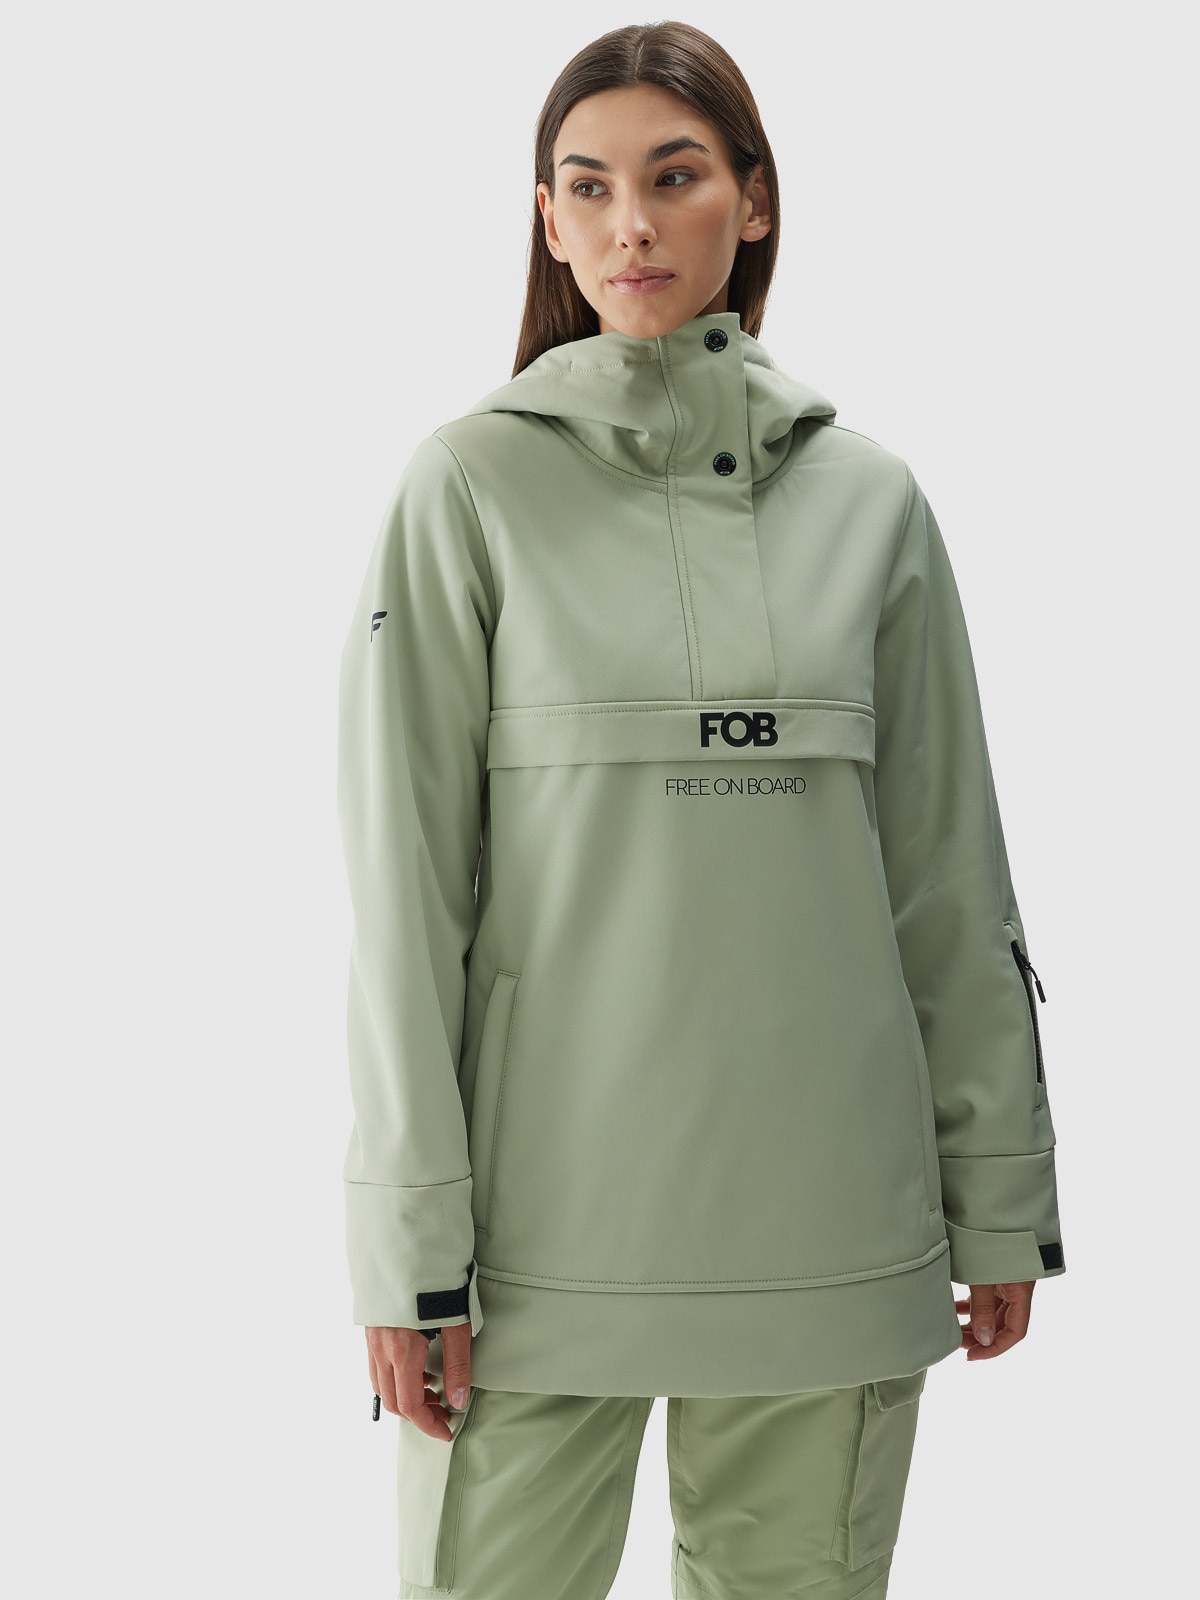 Dámska snowboardová softshellová bunda s membránou 5000 - zelenáá